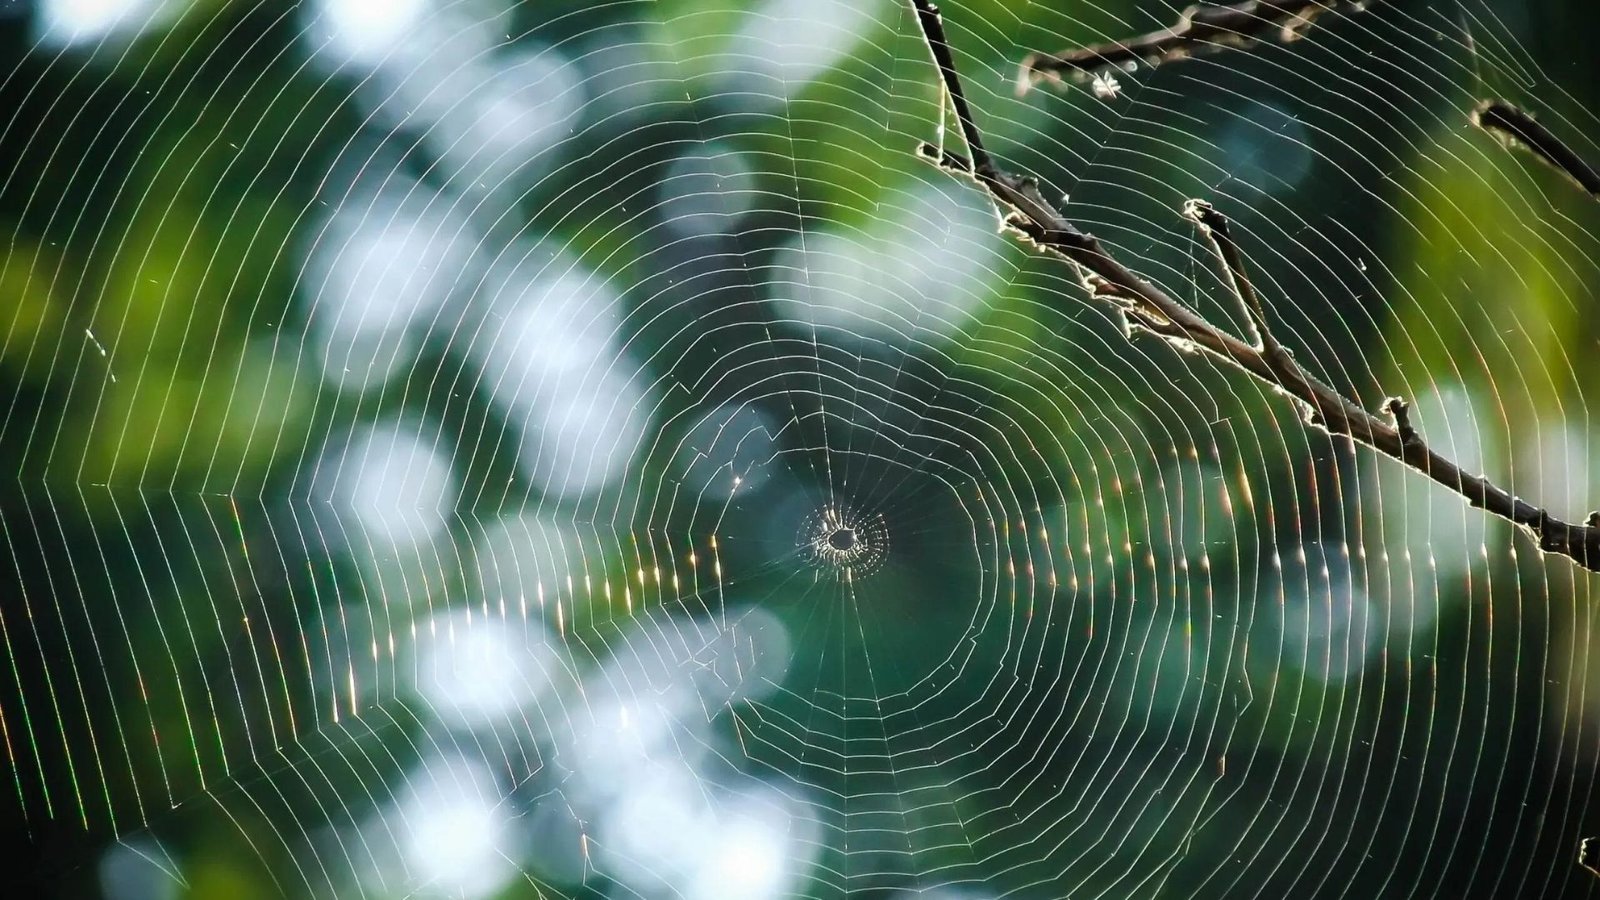  A Spider Web